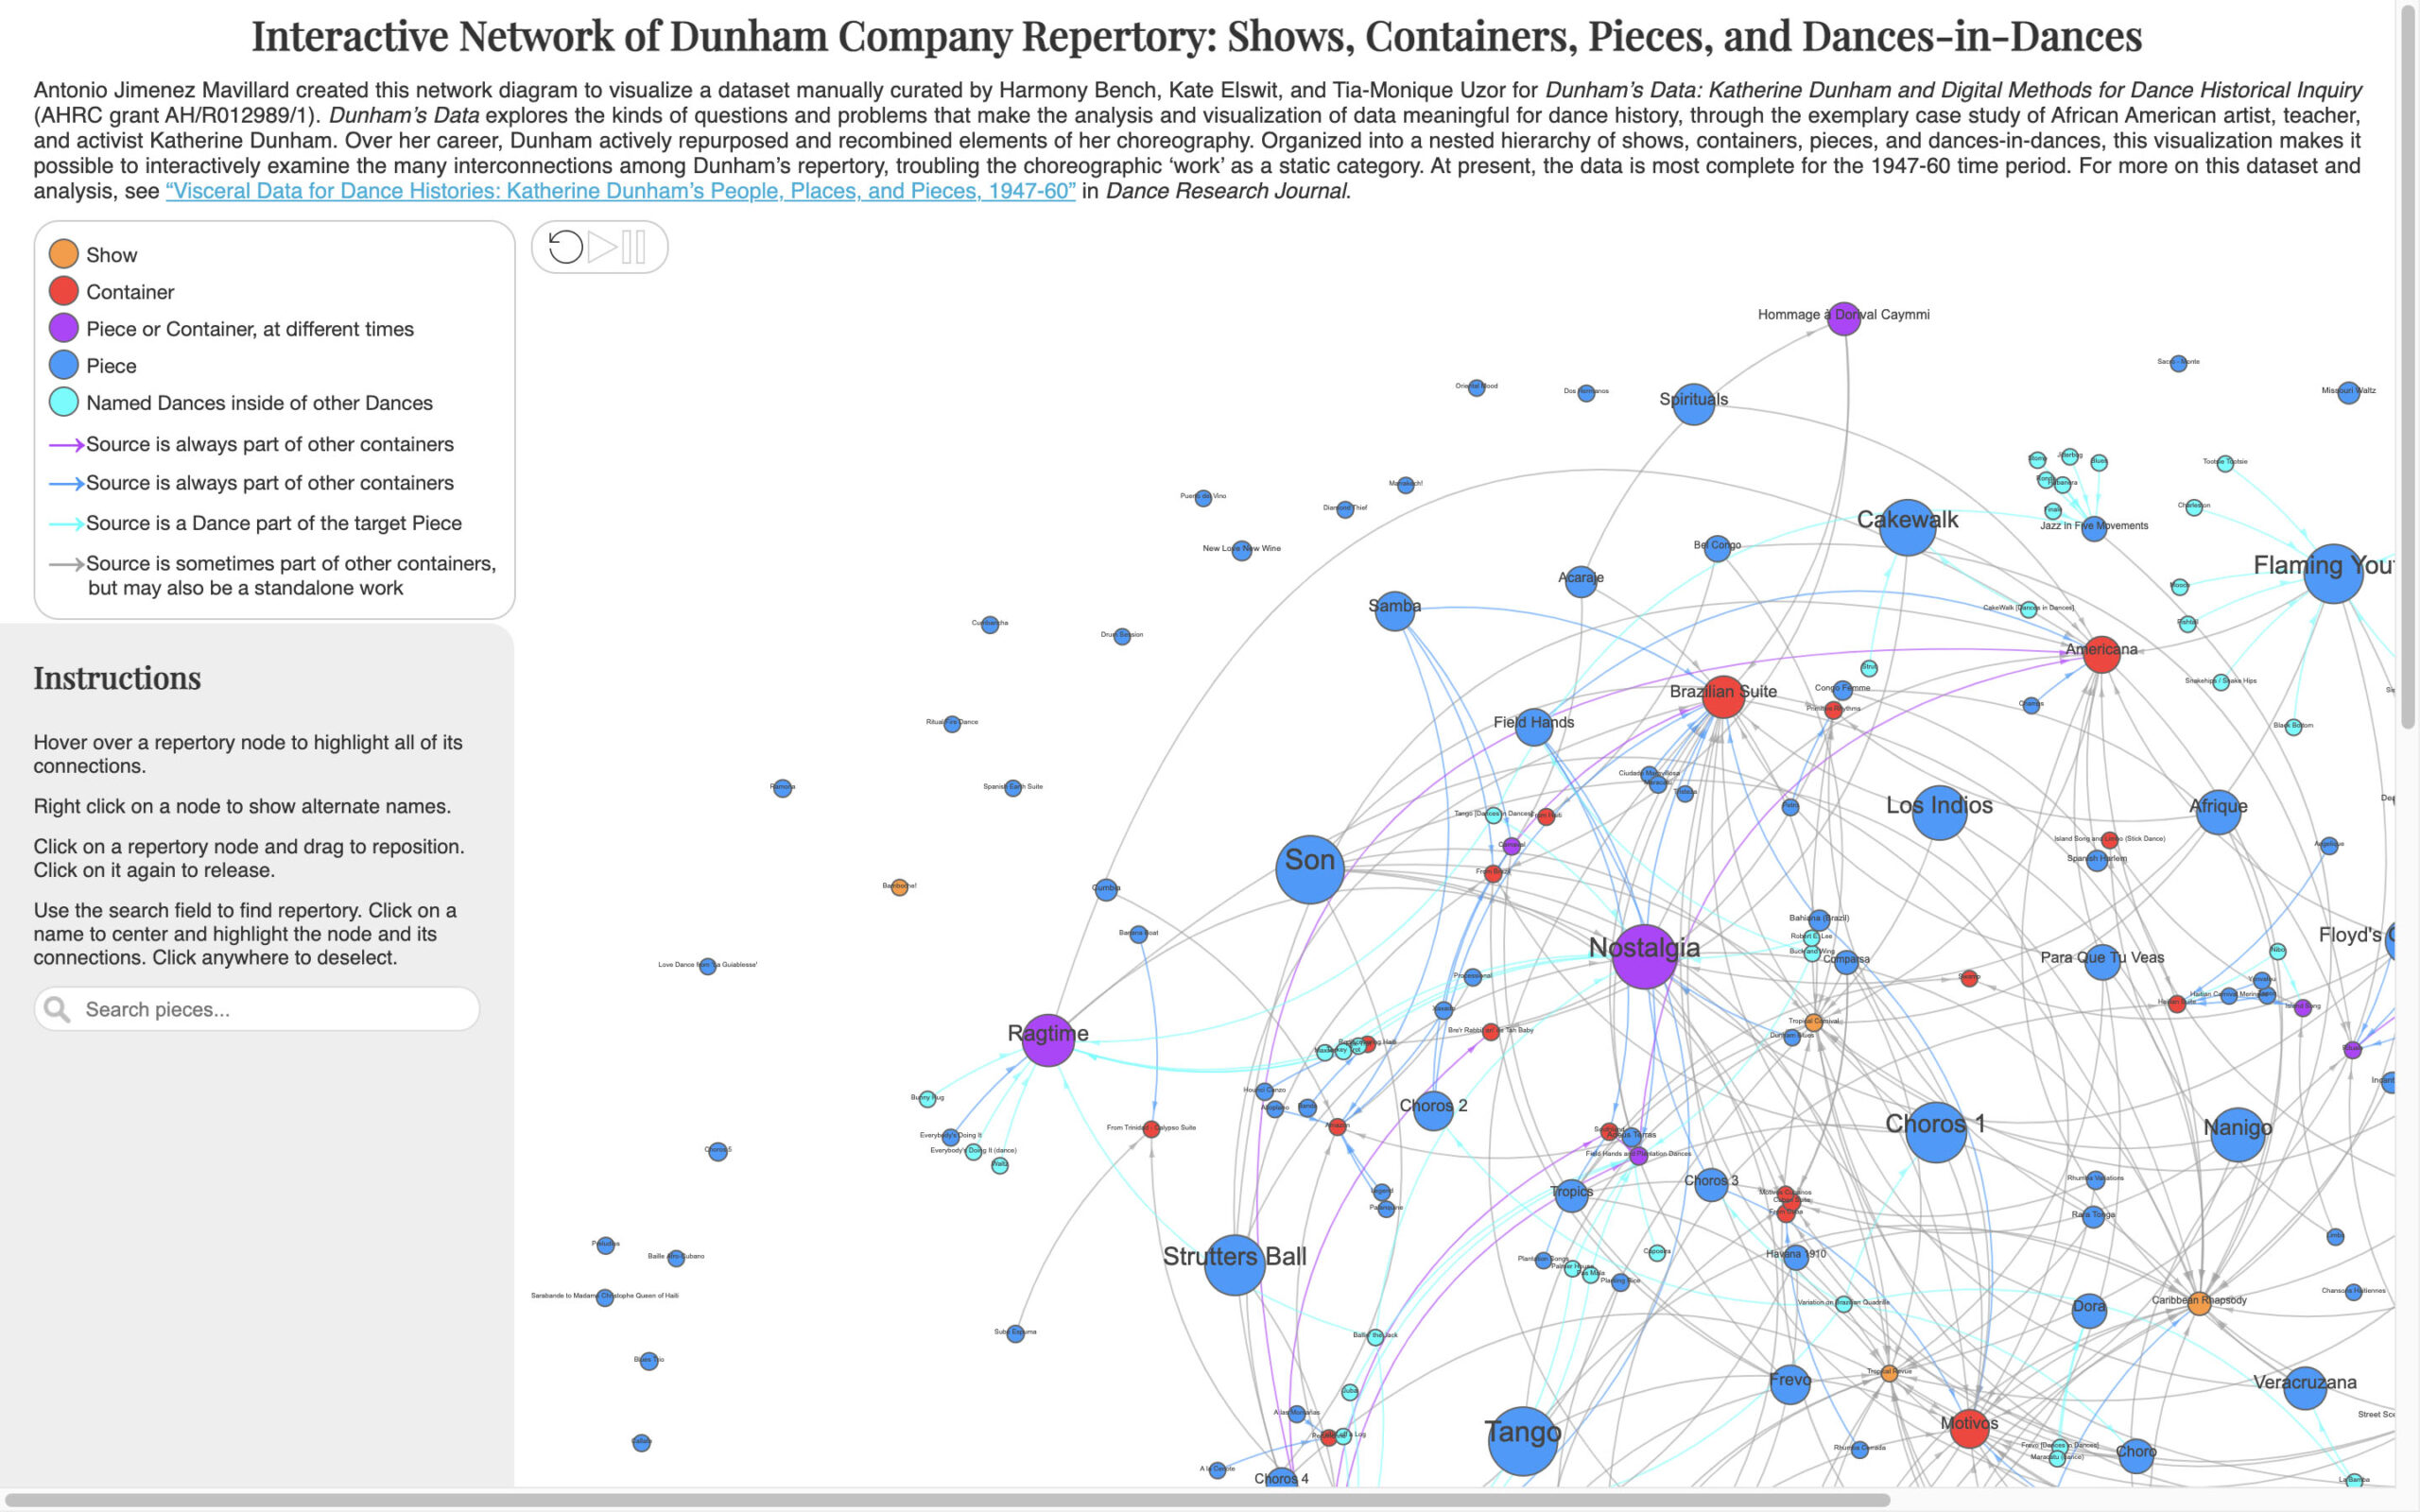 Interactive Network of Dunham Company Repertory, from Dunham’s Data